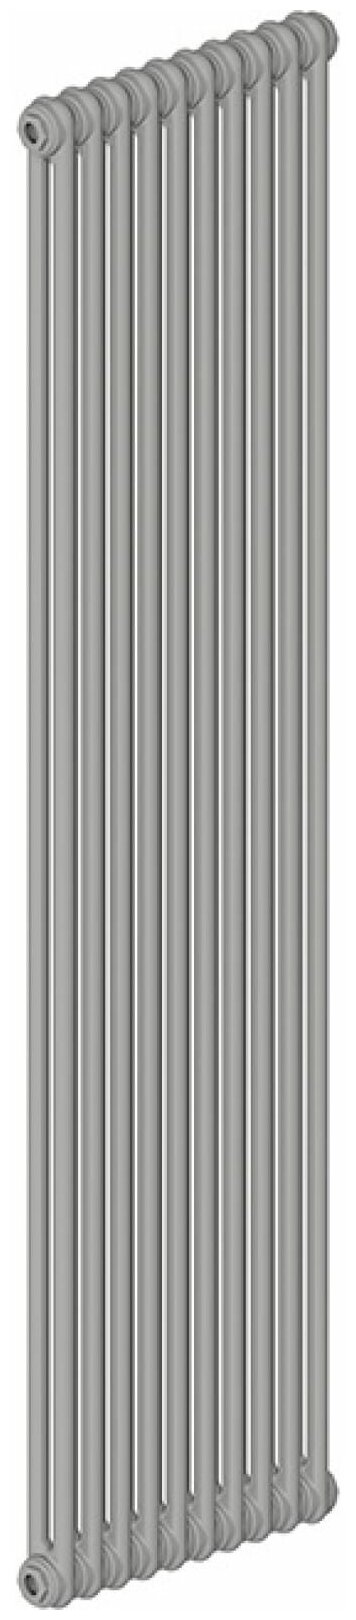 Радиатор IRSAP Tesi 2 21800/10 CL.03 серый Манхэттен T30 RR218001003A430N01 IRSAP